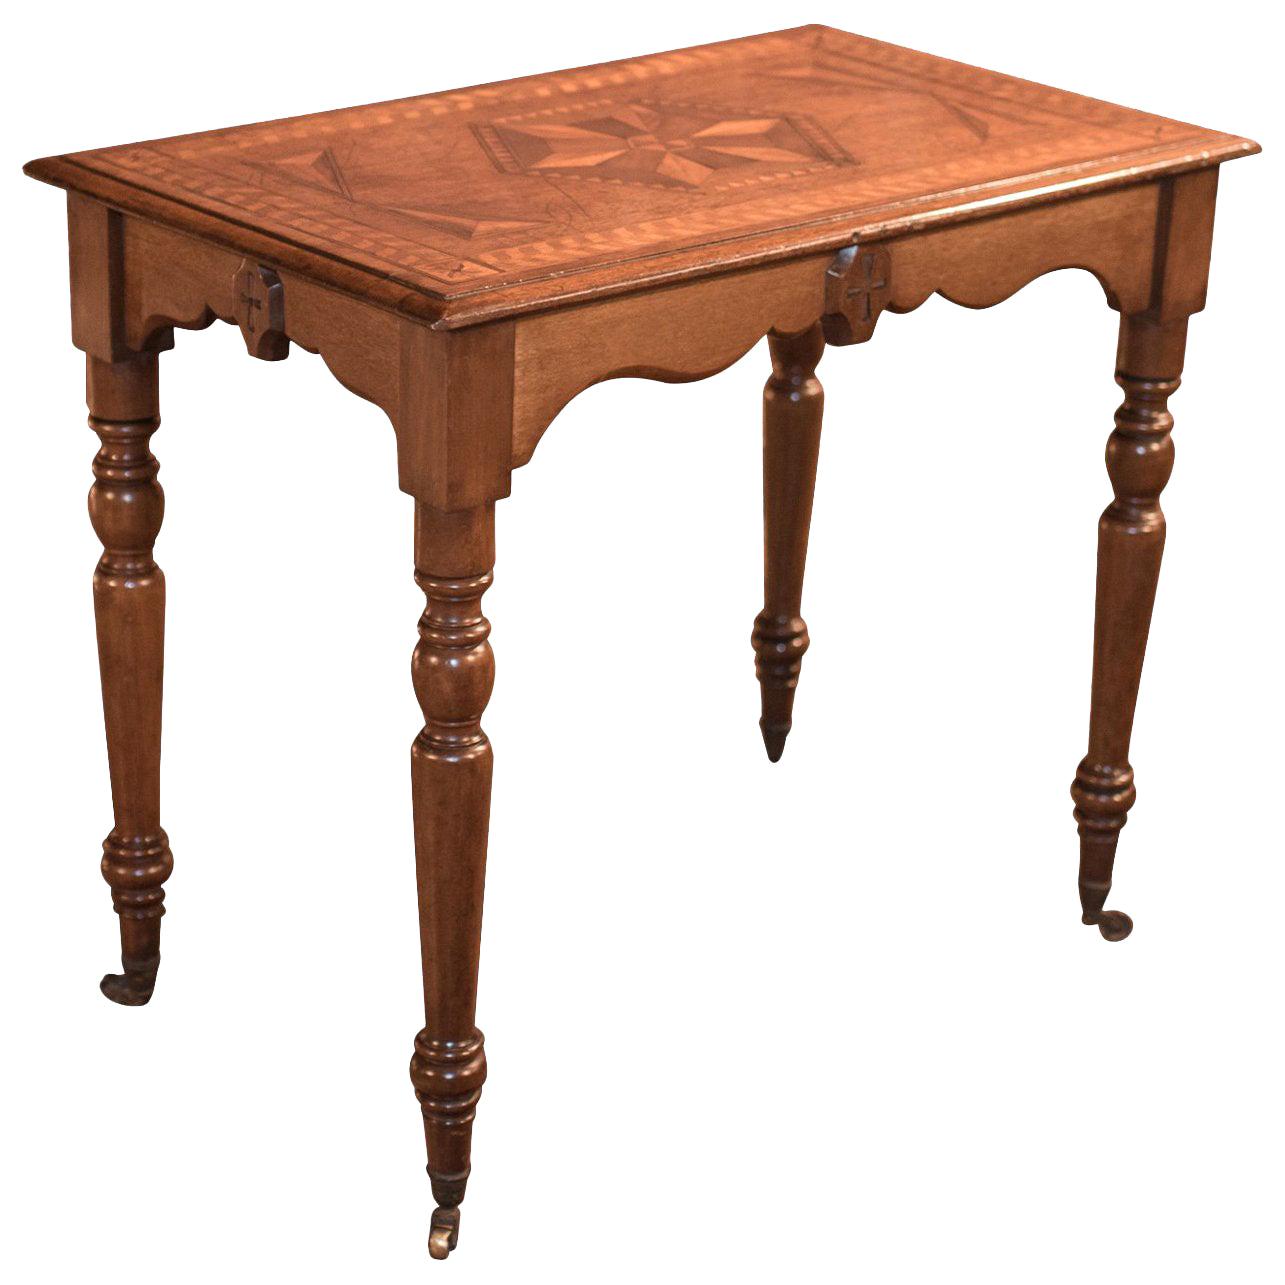 Antique Side Table, Georgian Oak, circa 1800